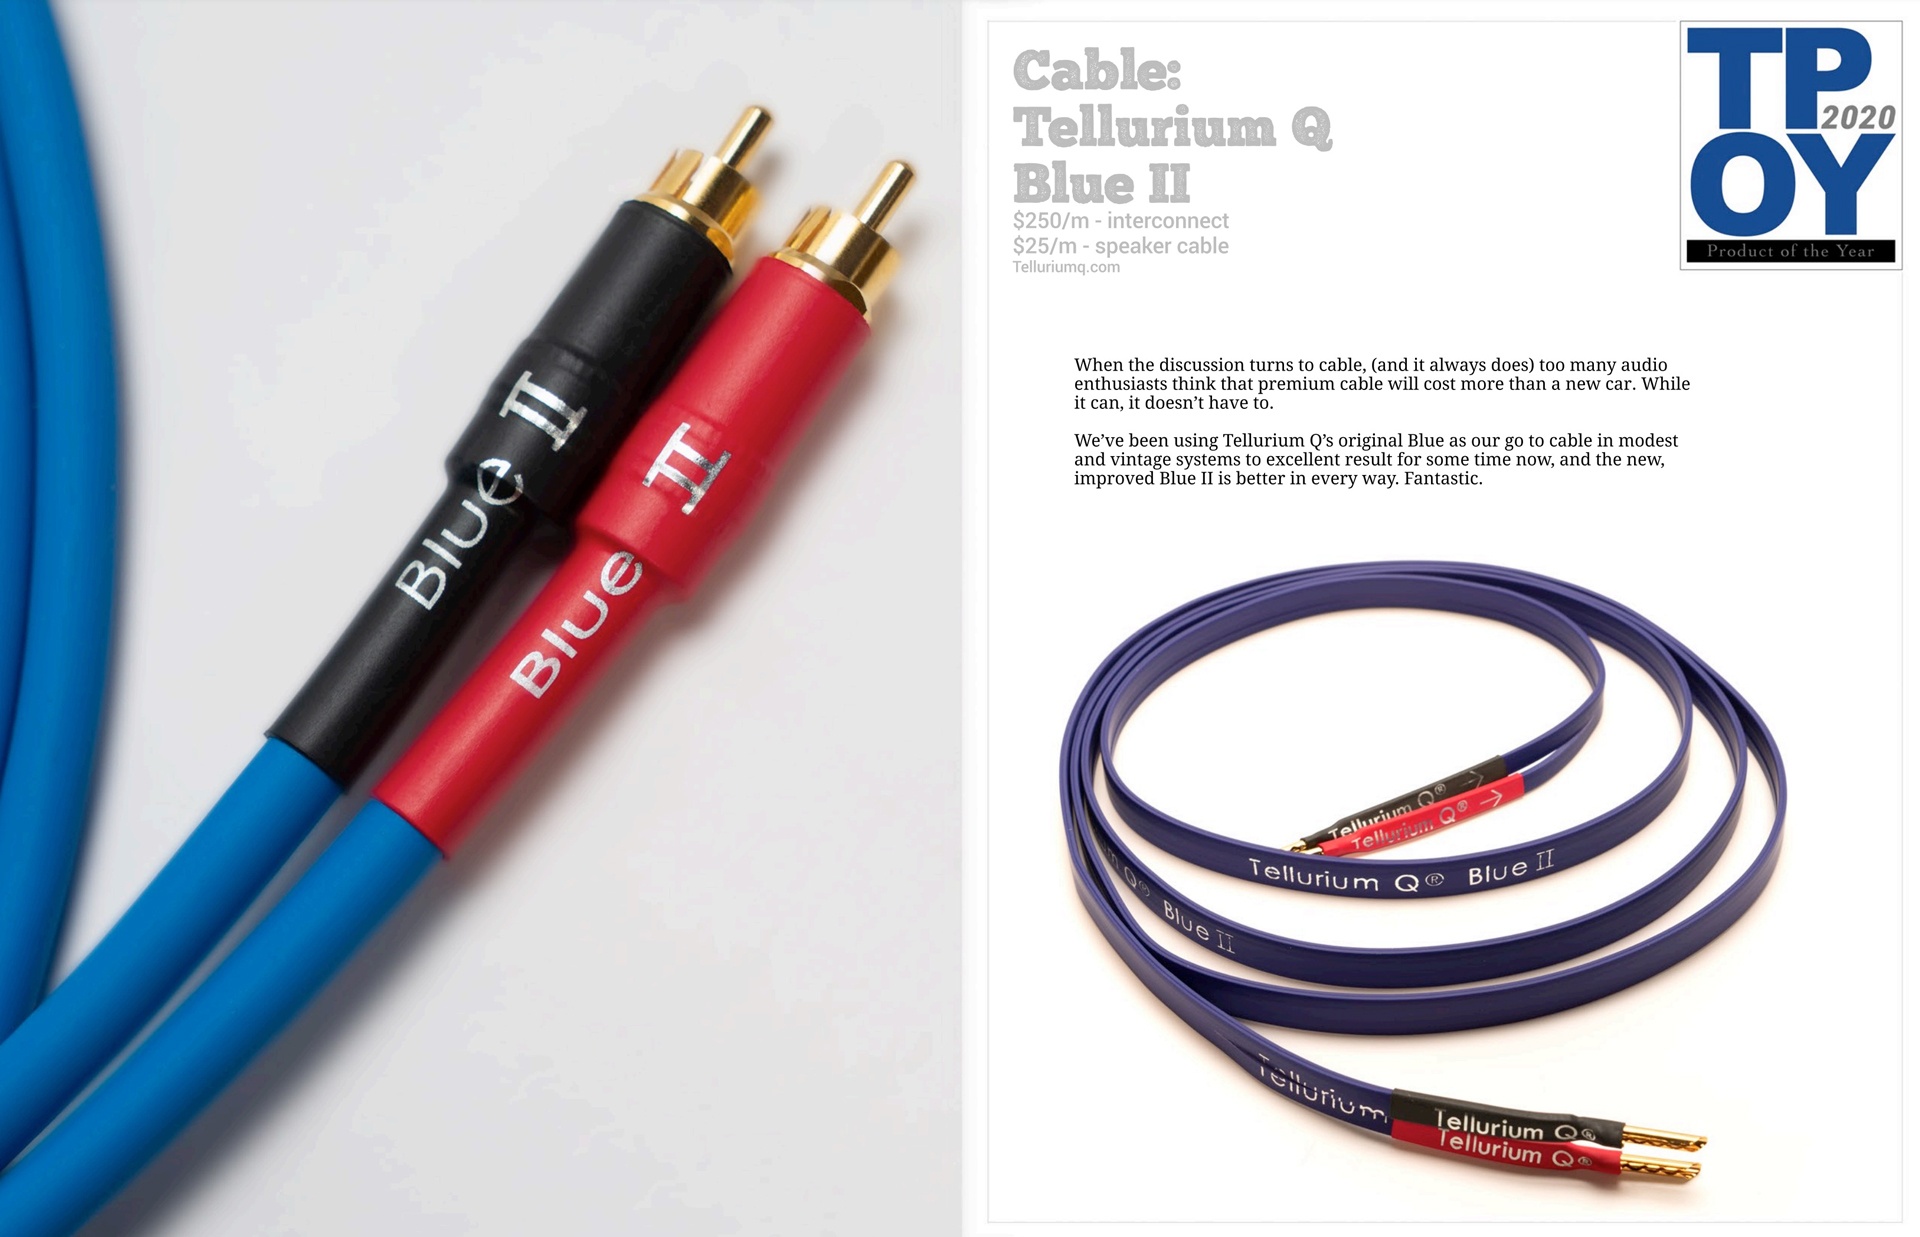 Blue II Kabel von Tellurium Q ist Product of the Year 2020 bei Tone Audio